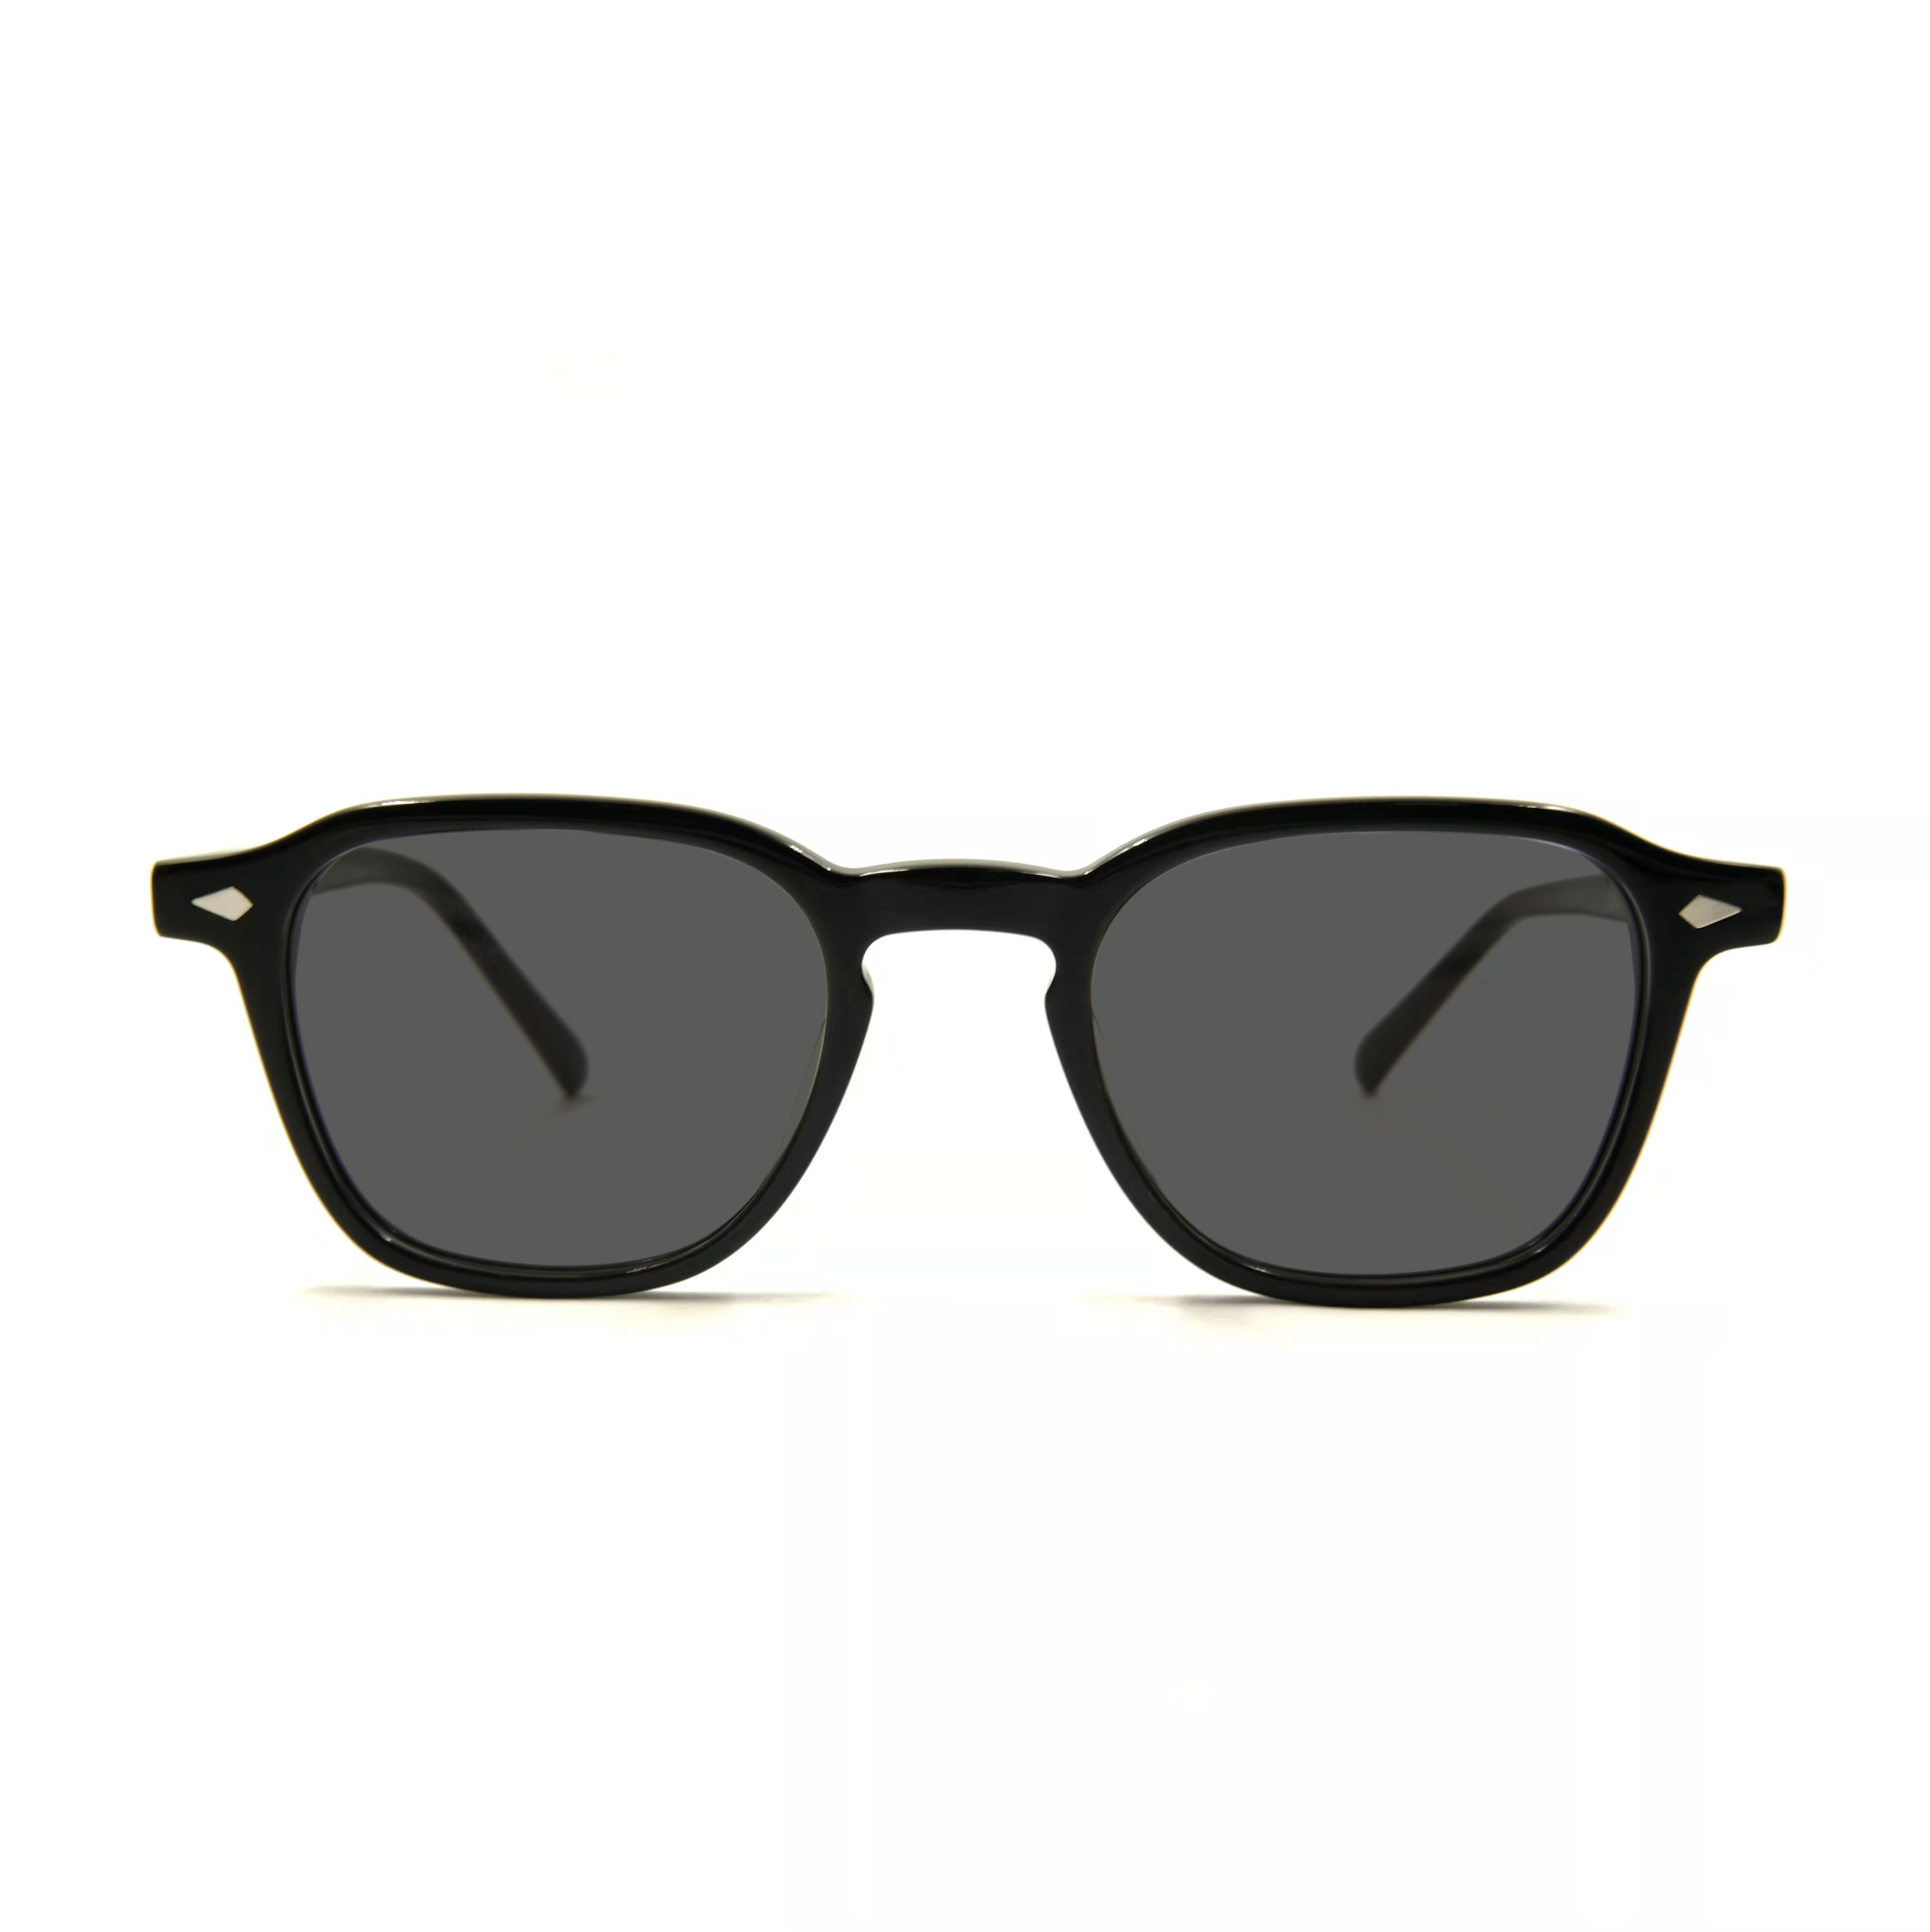 Black Acetate Square Sunglasses Shades Design Your Own Sunglasses Wholesale Glases